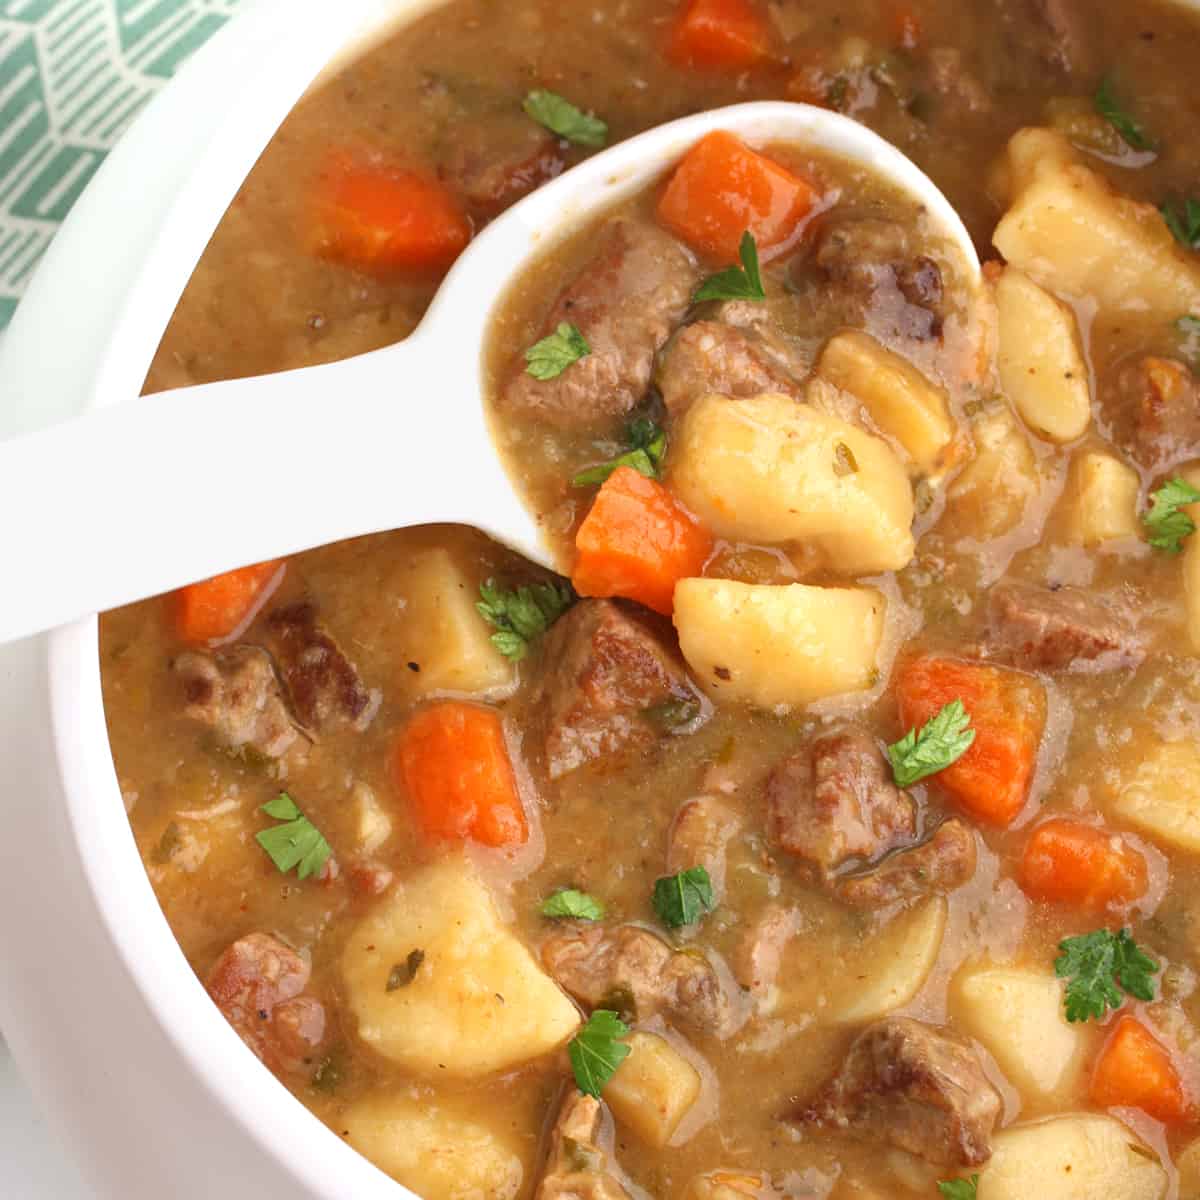 Irish stew recipe authentic traditional lamb potatoes carrots parsnips onions